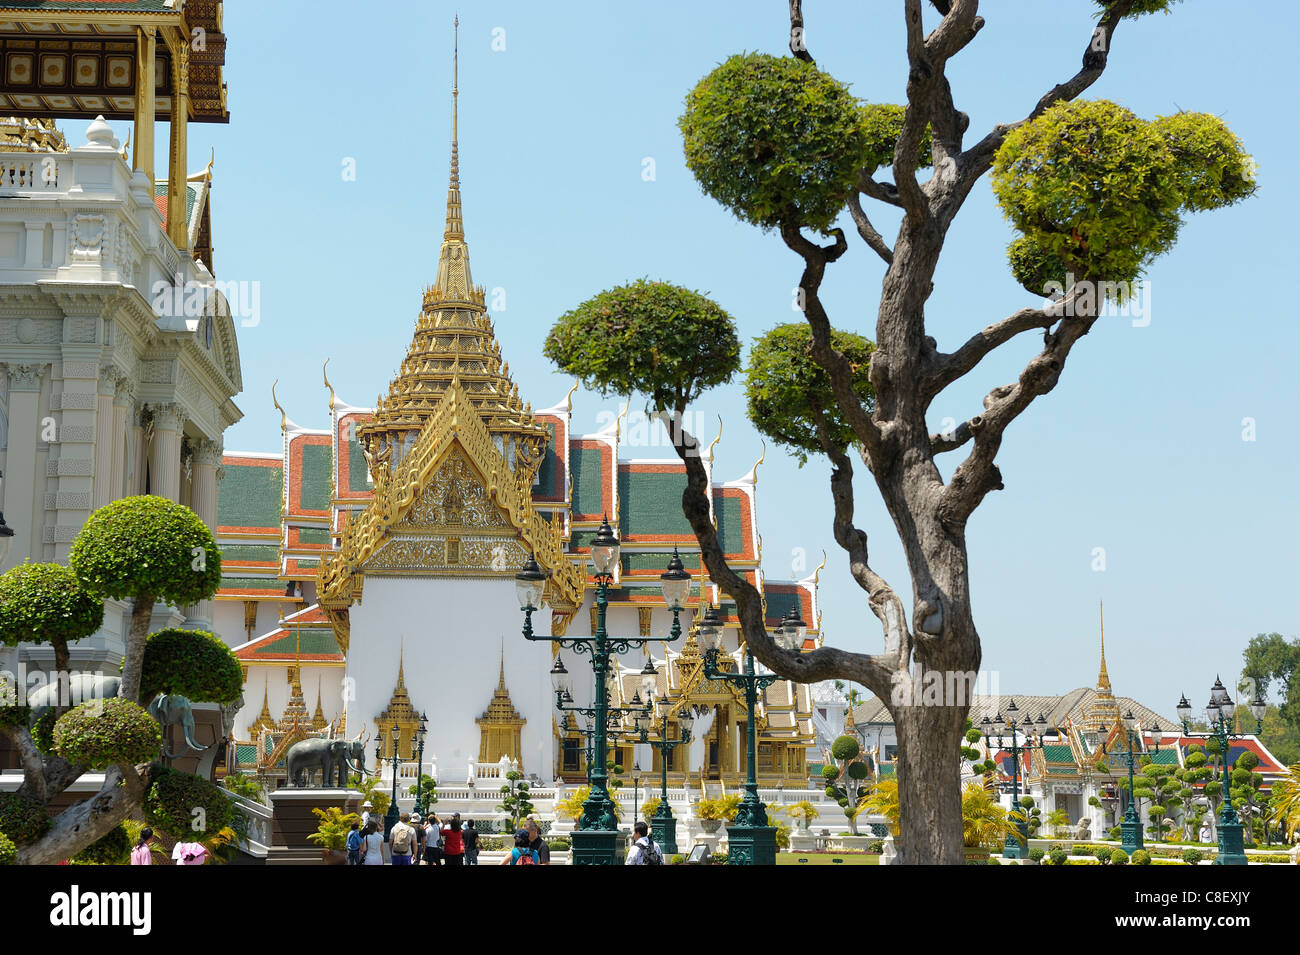 Dusit, Maha, Prasat, Hall, Grand Palace, Old, City, town, Bangkok, Thailand, Asia, trees Stock Photo